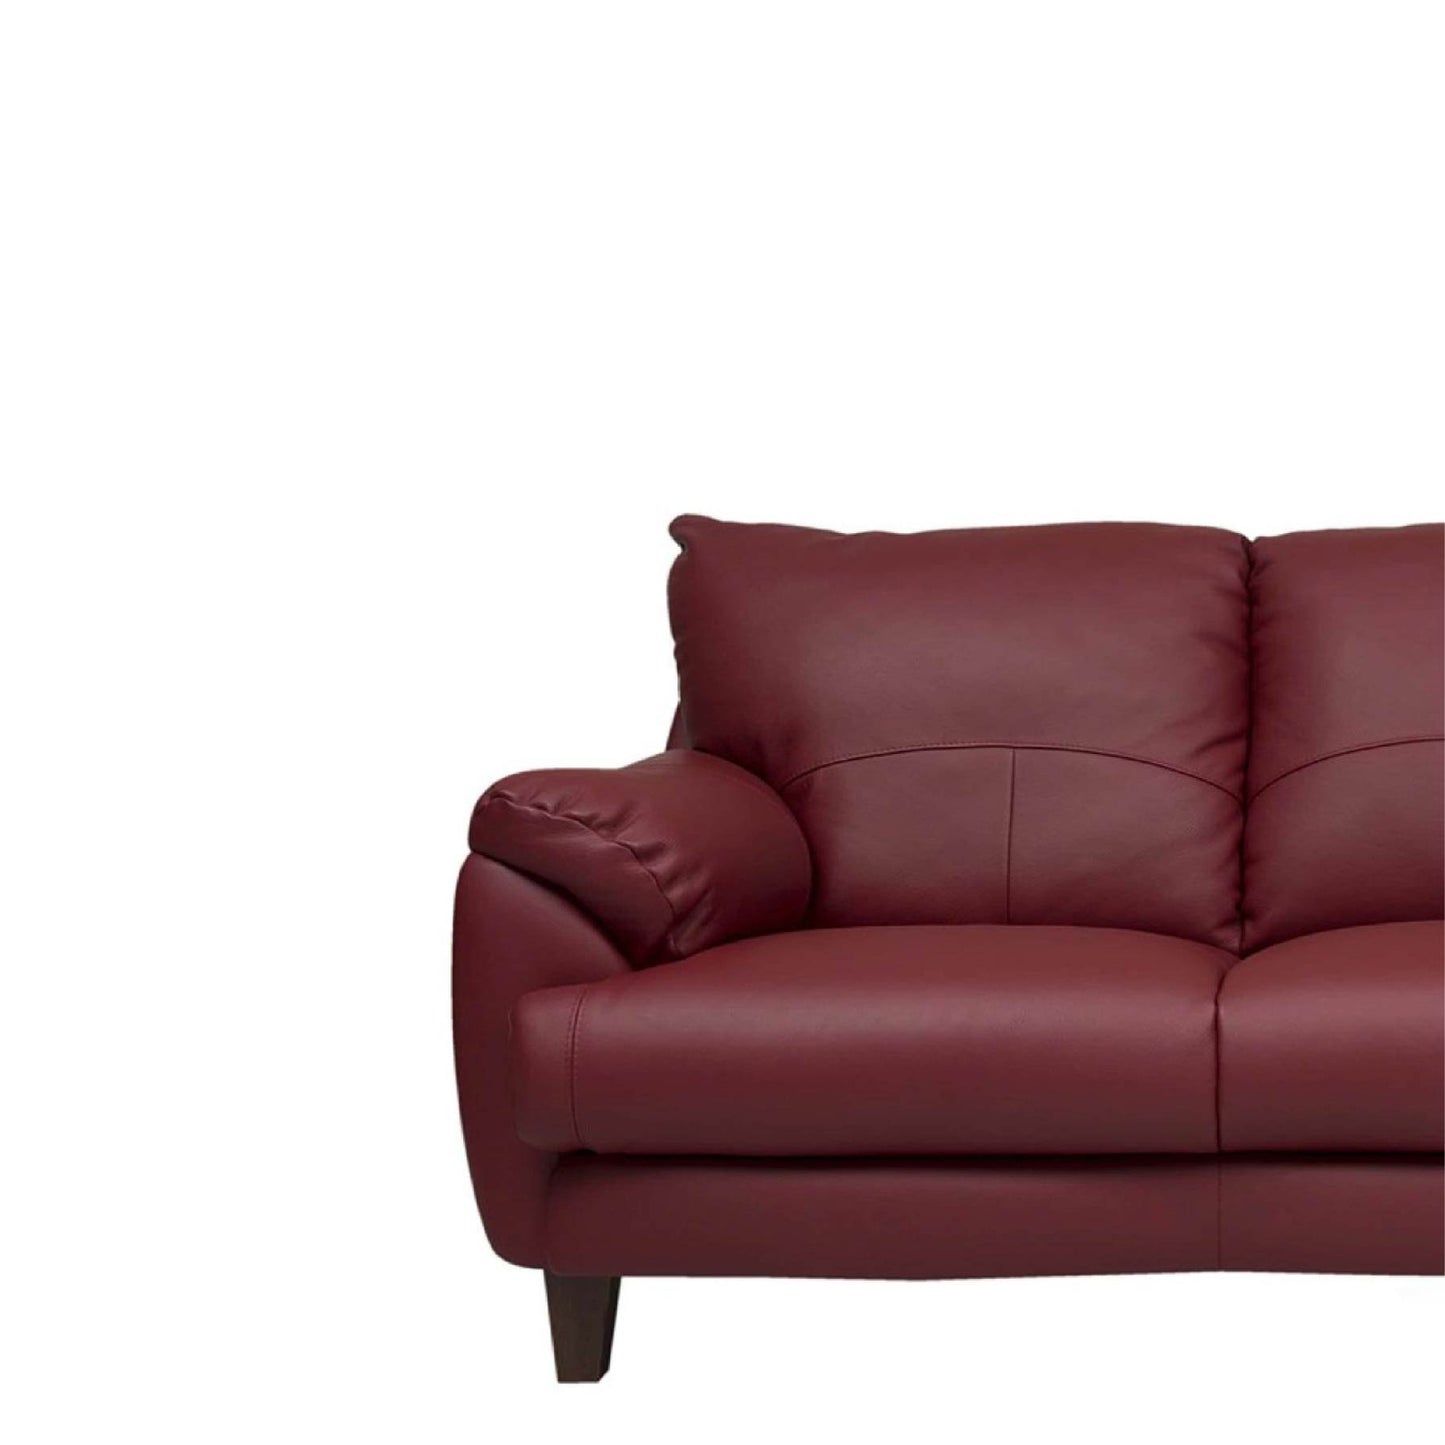 Bộ sofa 3 chỗ - 1 chỗ Westwood